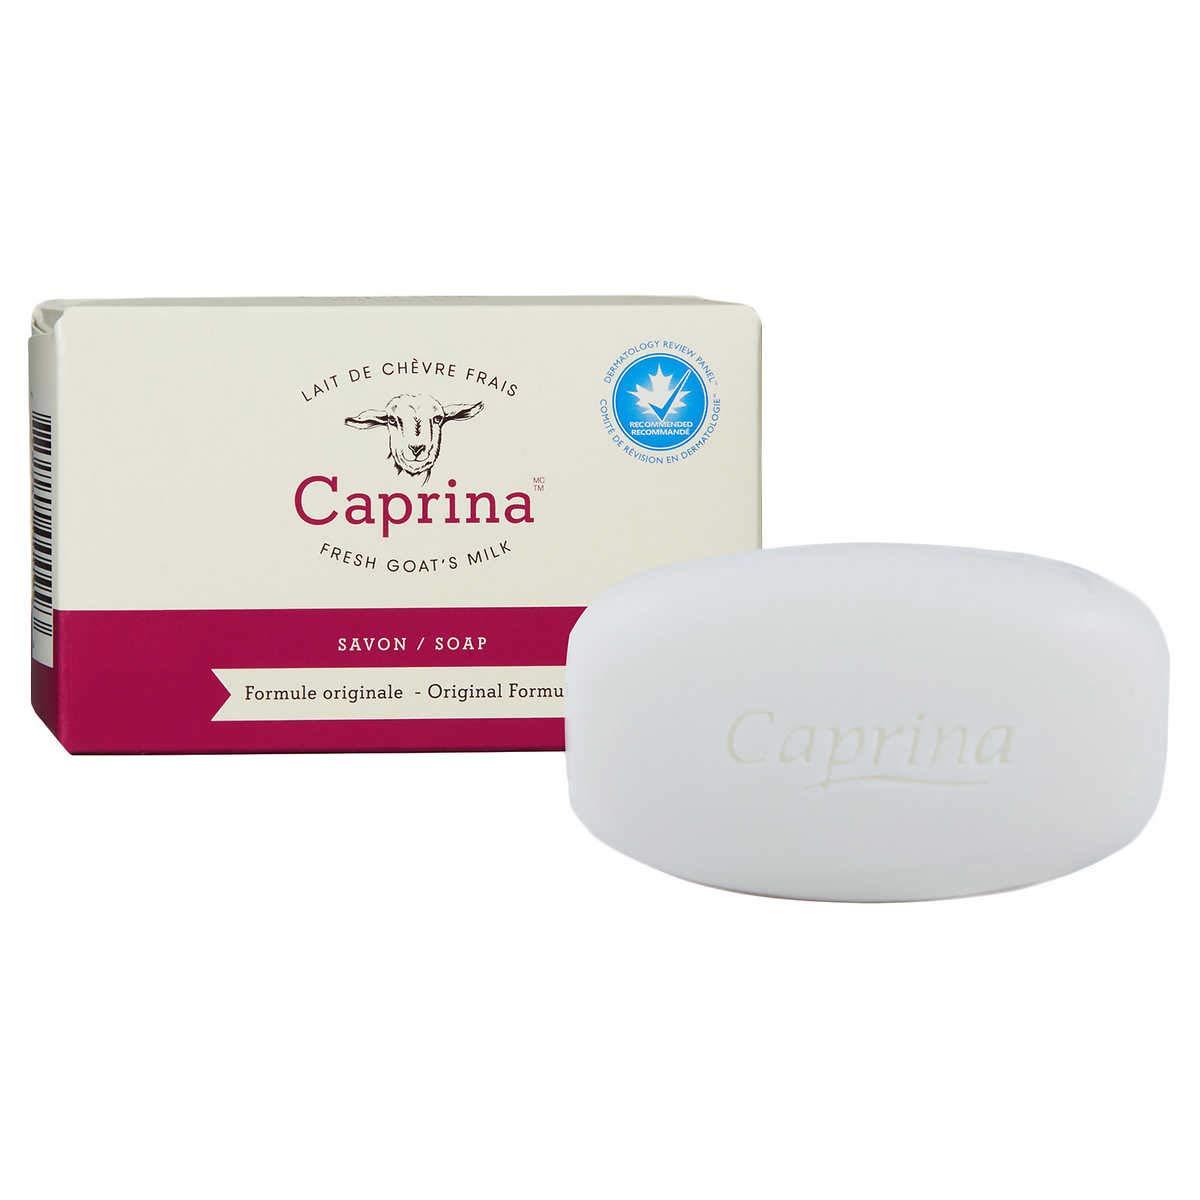 Caprina Amazing Body Wash - Original Formula